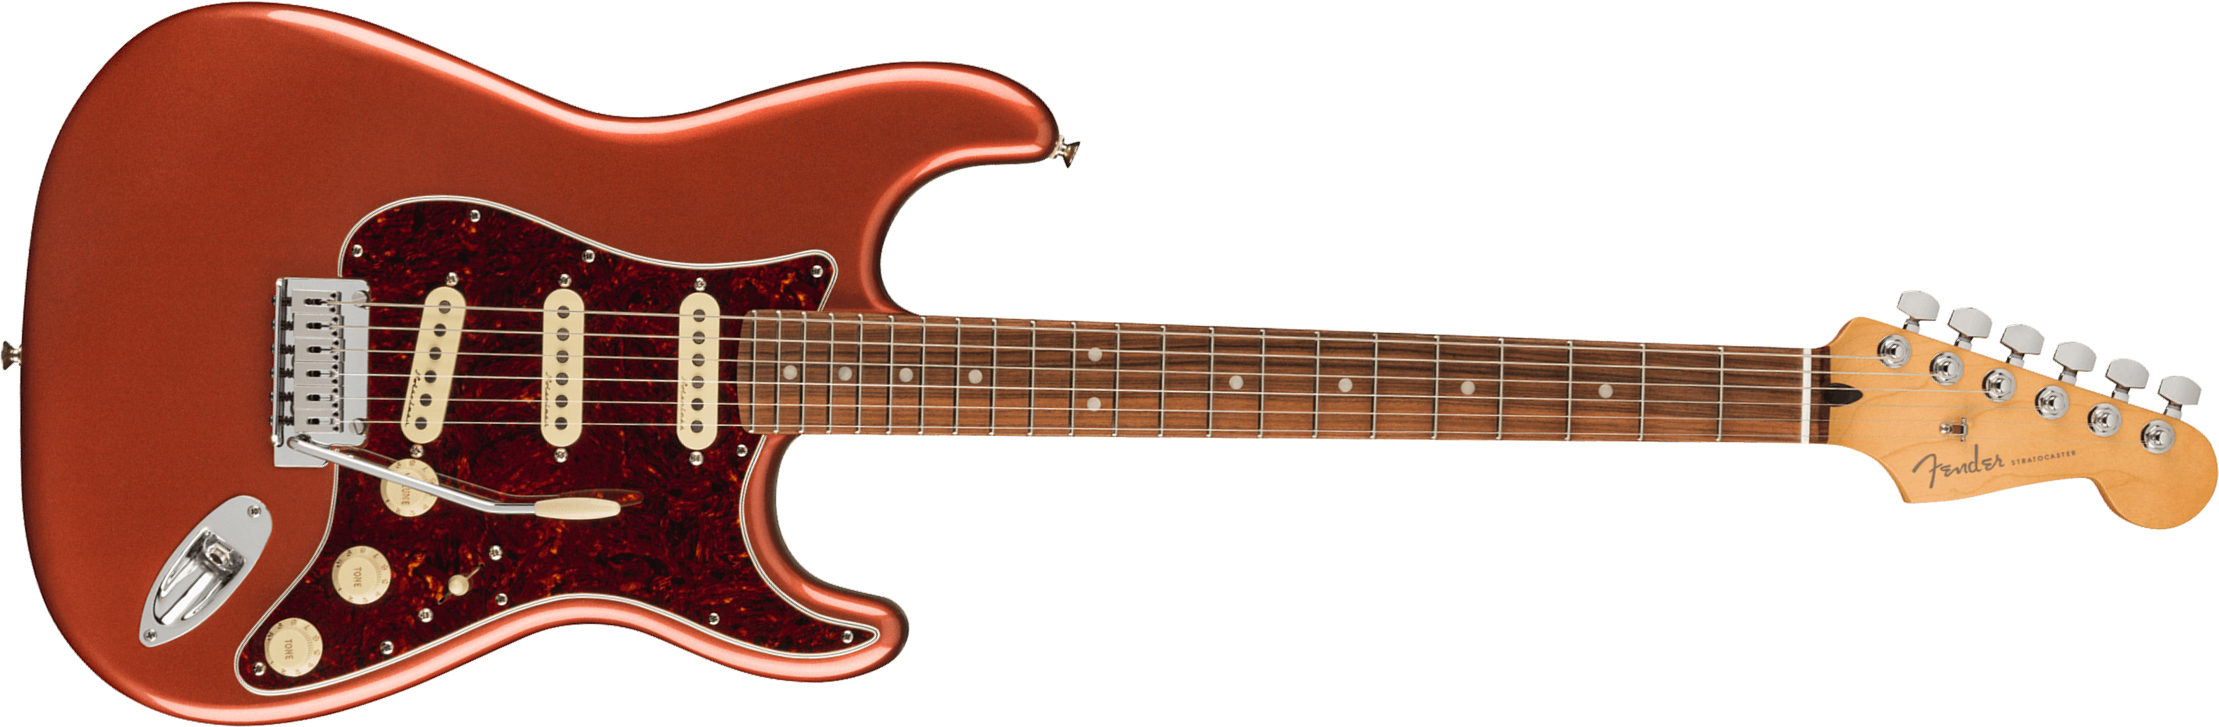 Fender Strat Player Plus Mex 3s Trem Pf - Aged Candy Apple Red - Guitare Électrique Forme Str - Main picture